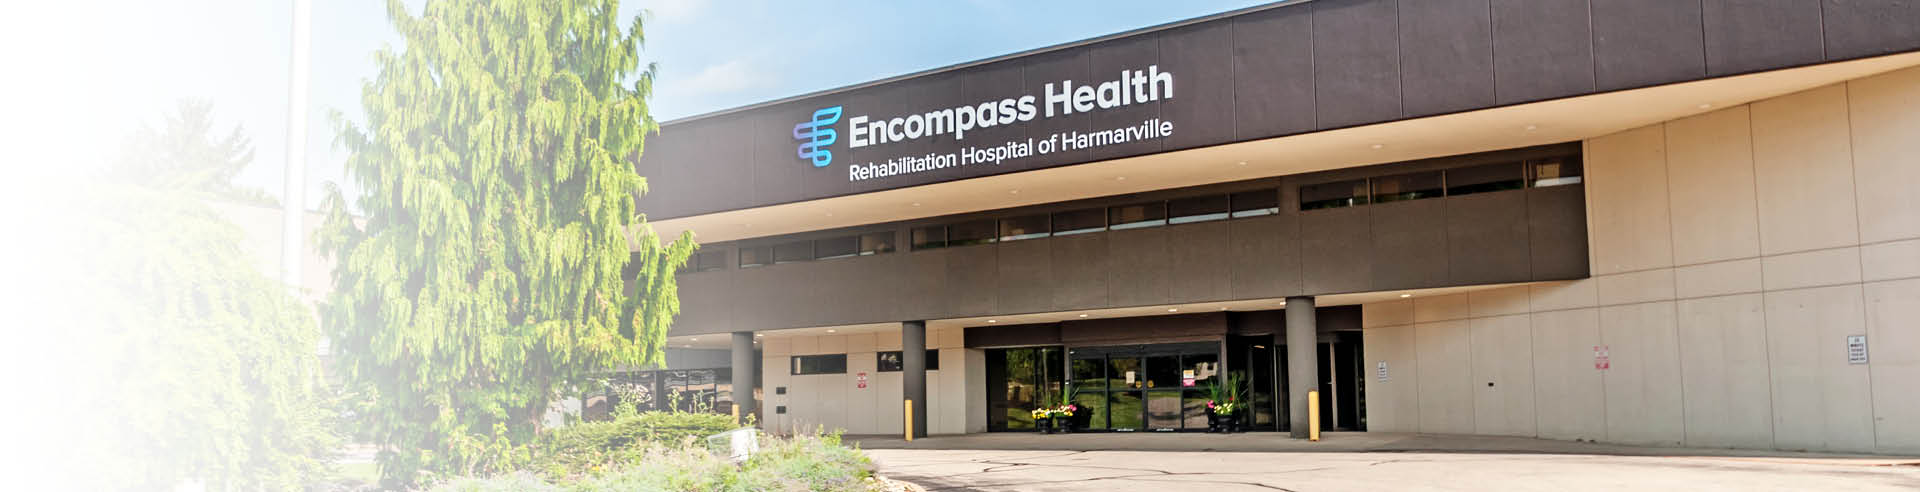 Exterior image of Encompass Health Rehabilitation Hospital of Harmarville